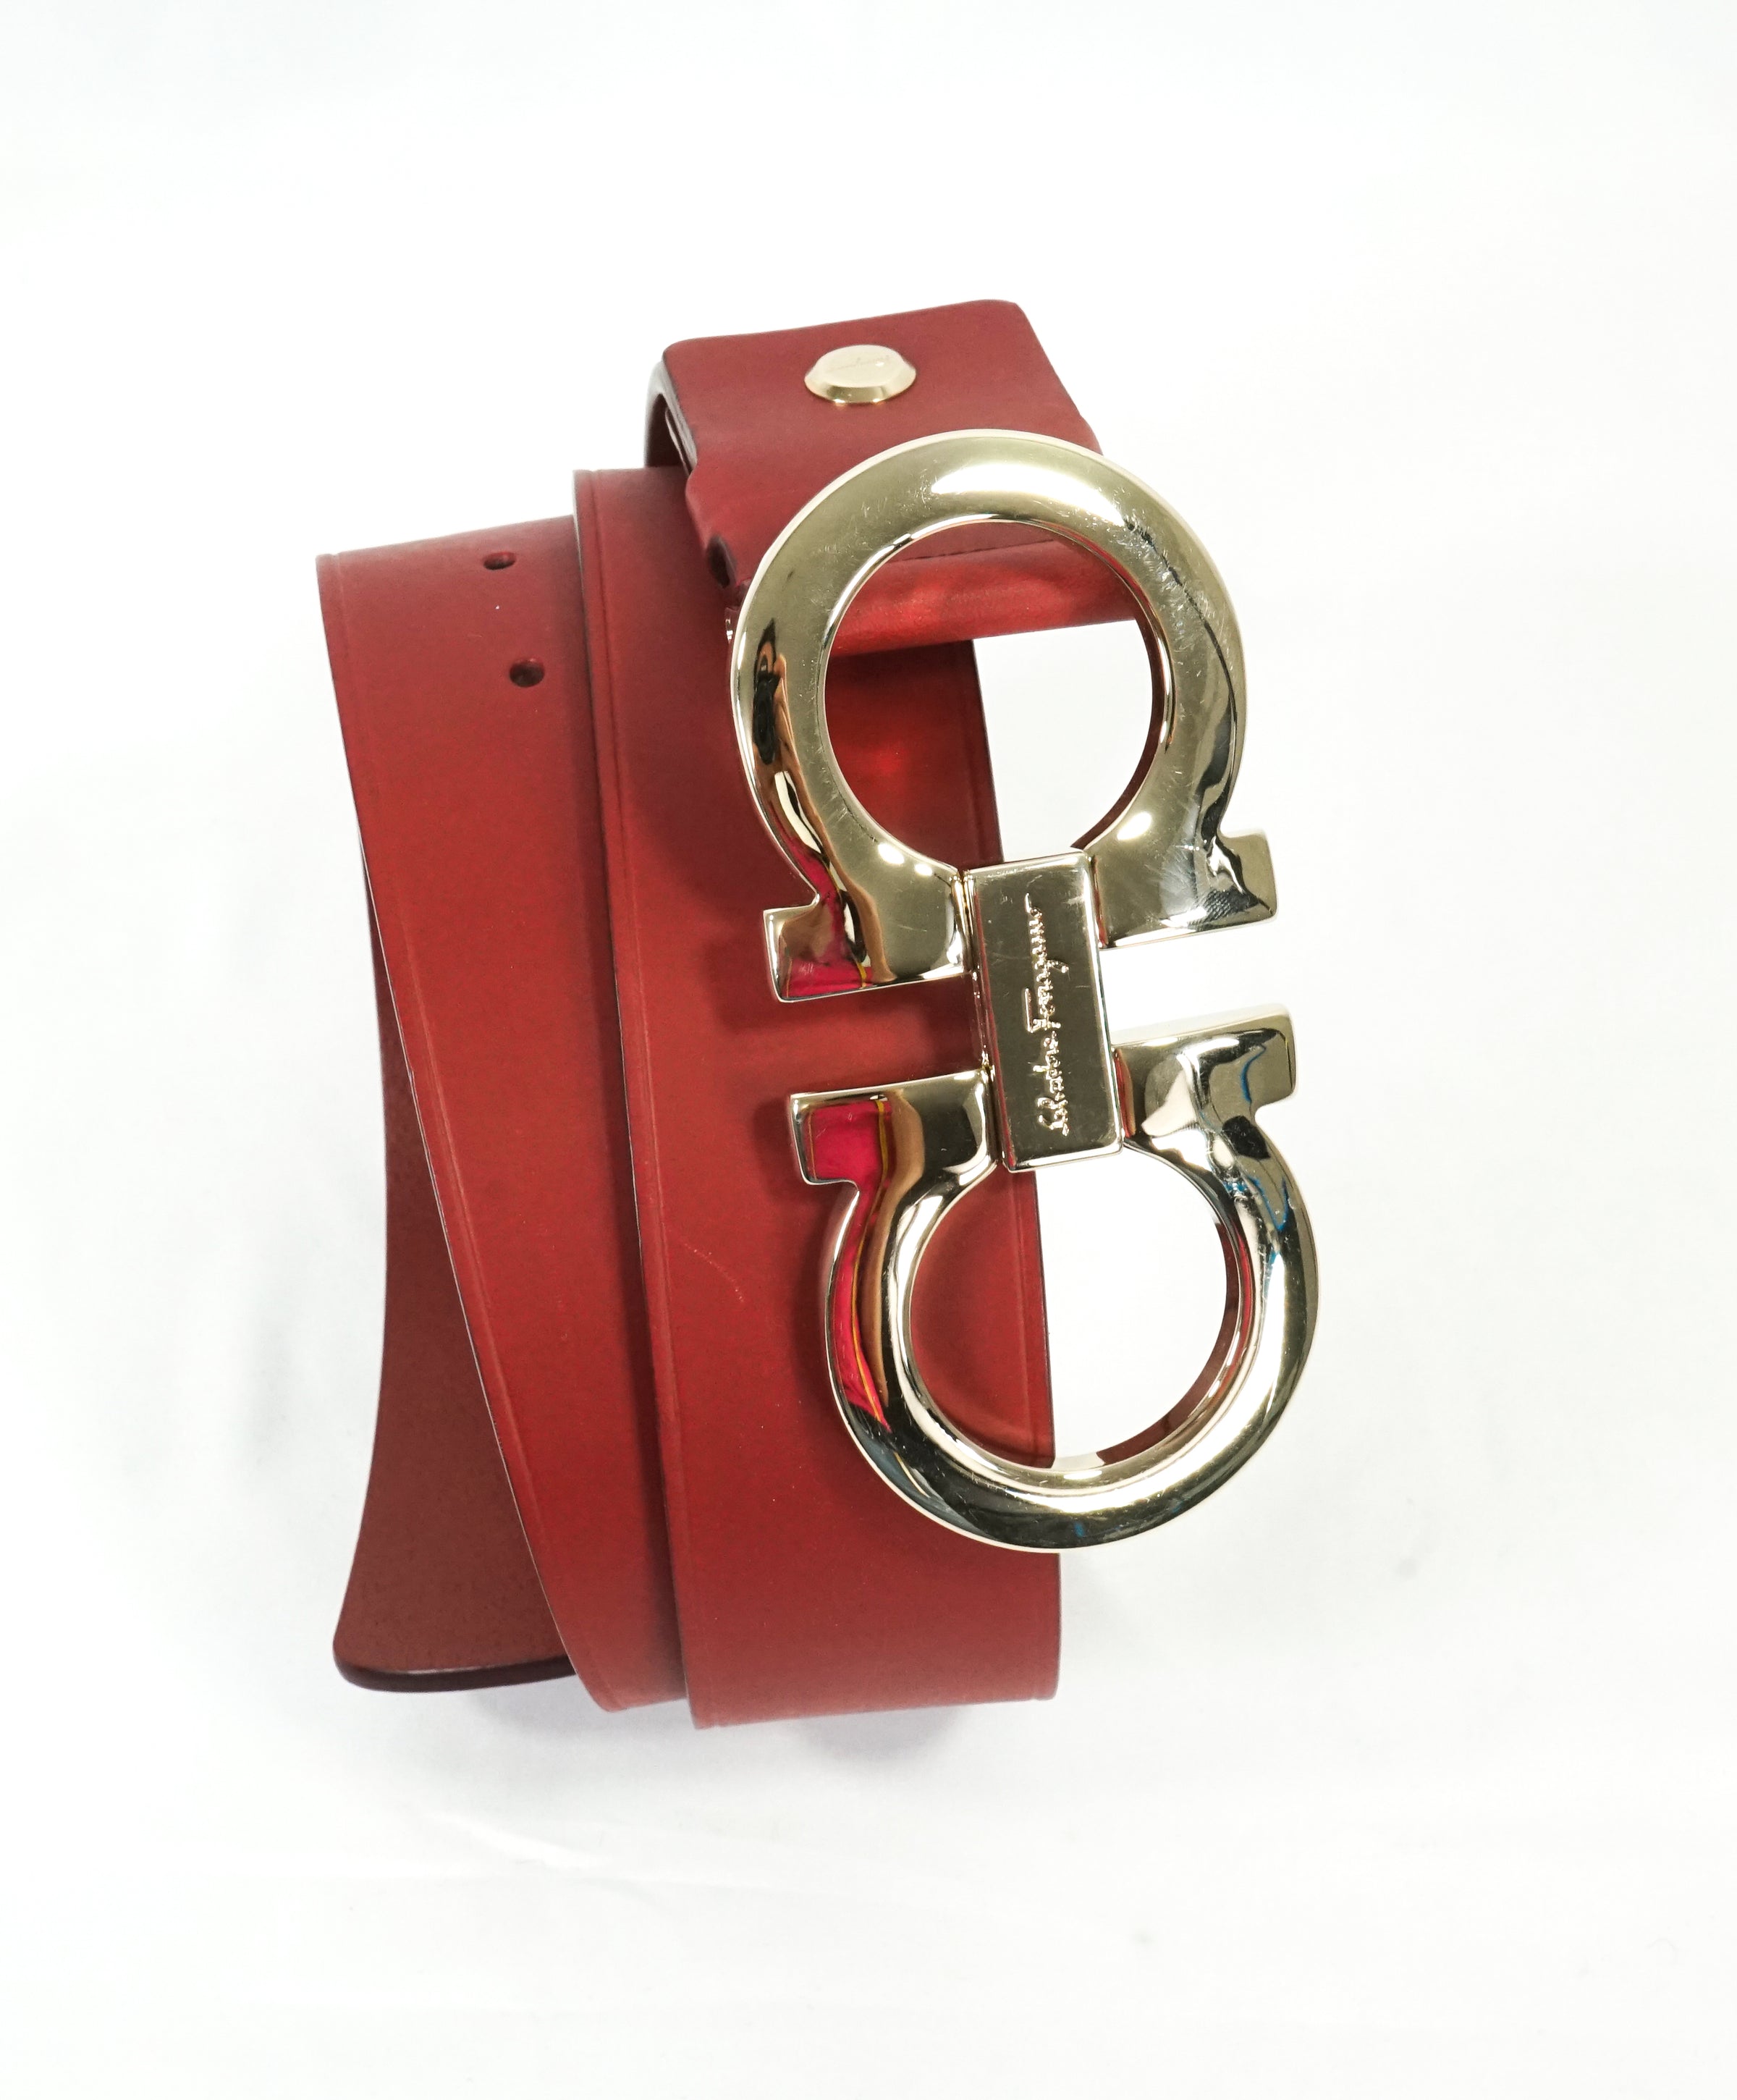 Ferragamo Belt in Red for Men